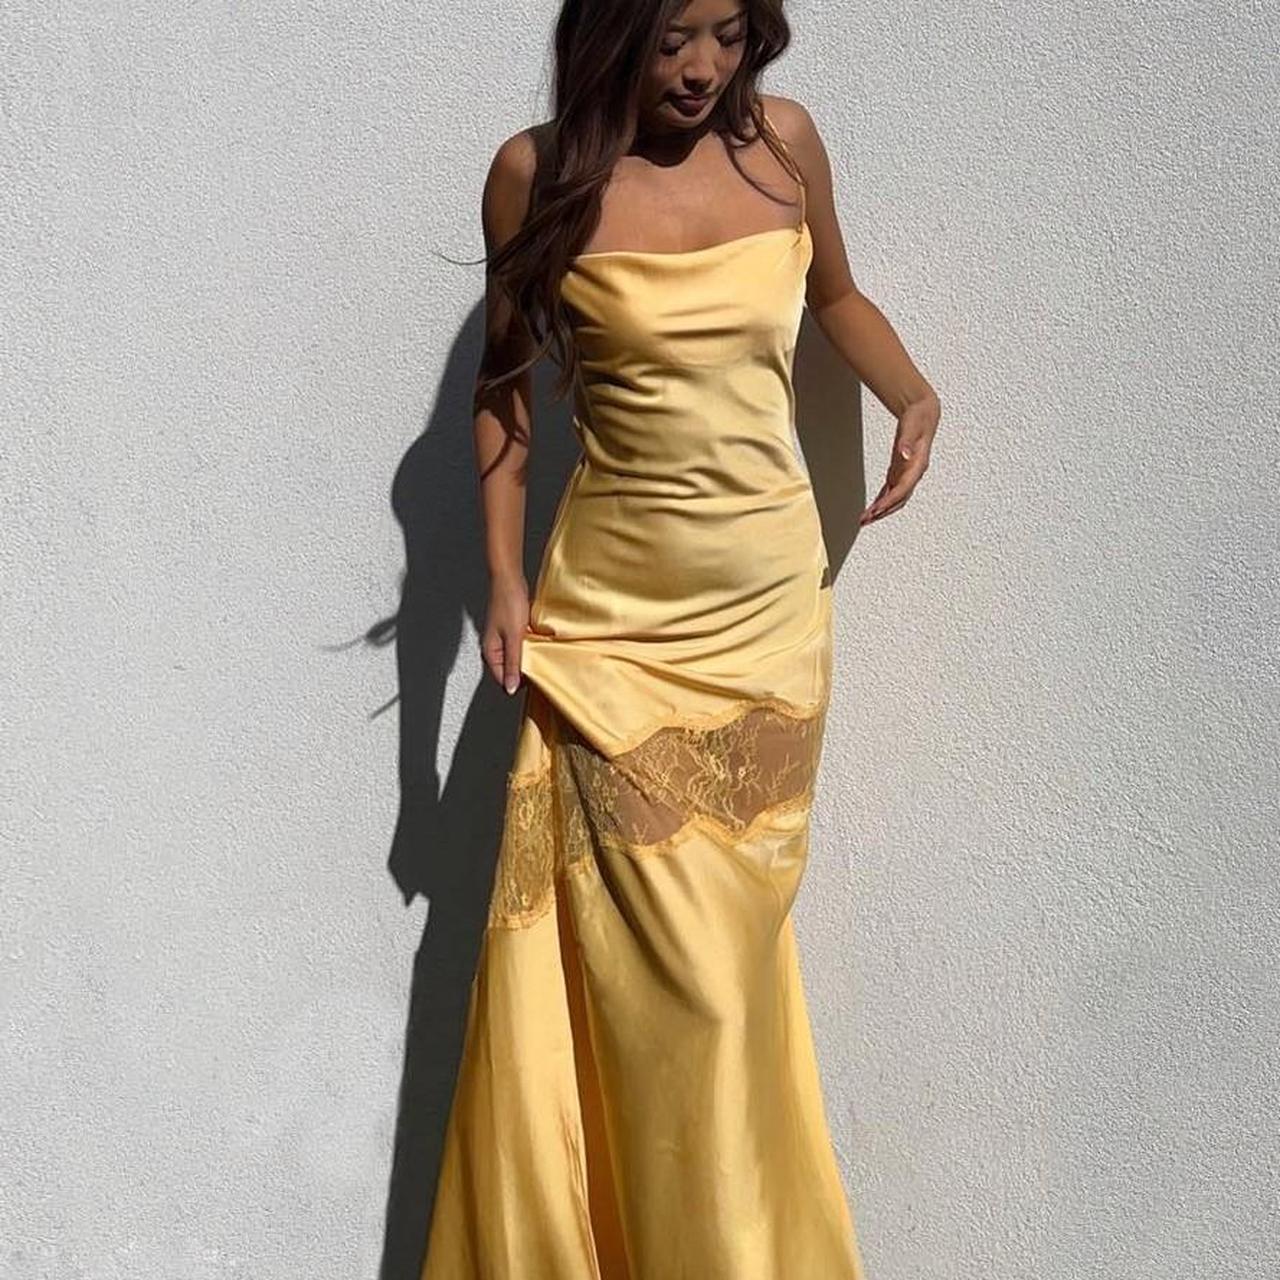 Renting Meshki yellow chandra dress Size... - Depop